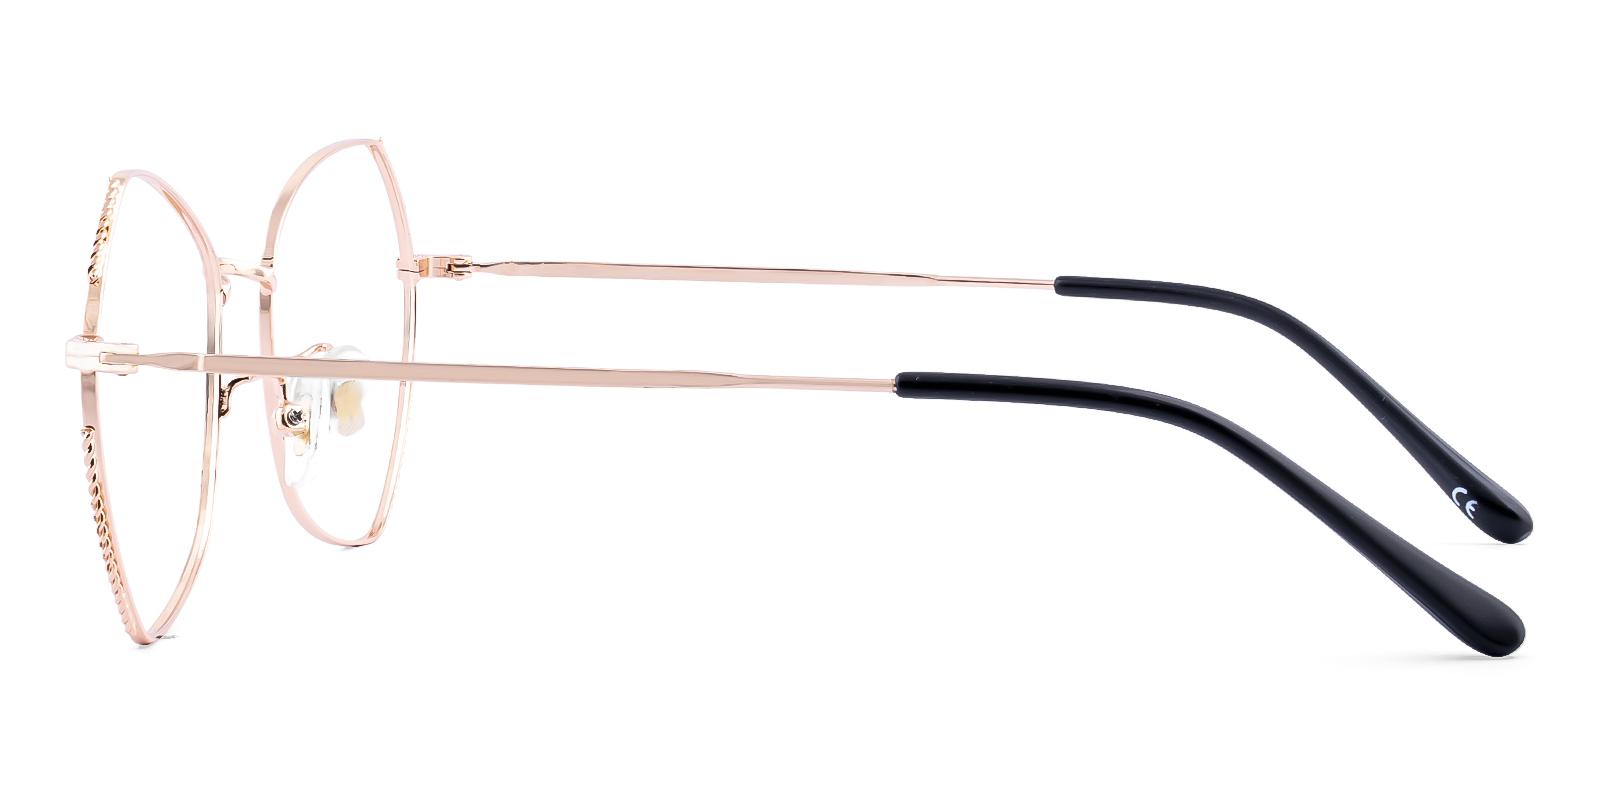 Dontic Rosegold Metal Eyeglasses , NosePads Frames from ABBE Glasses